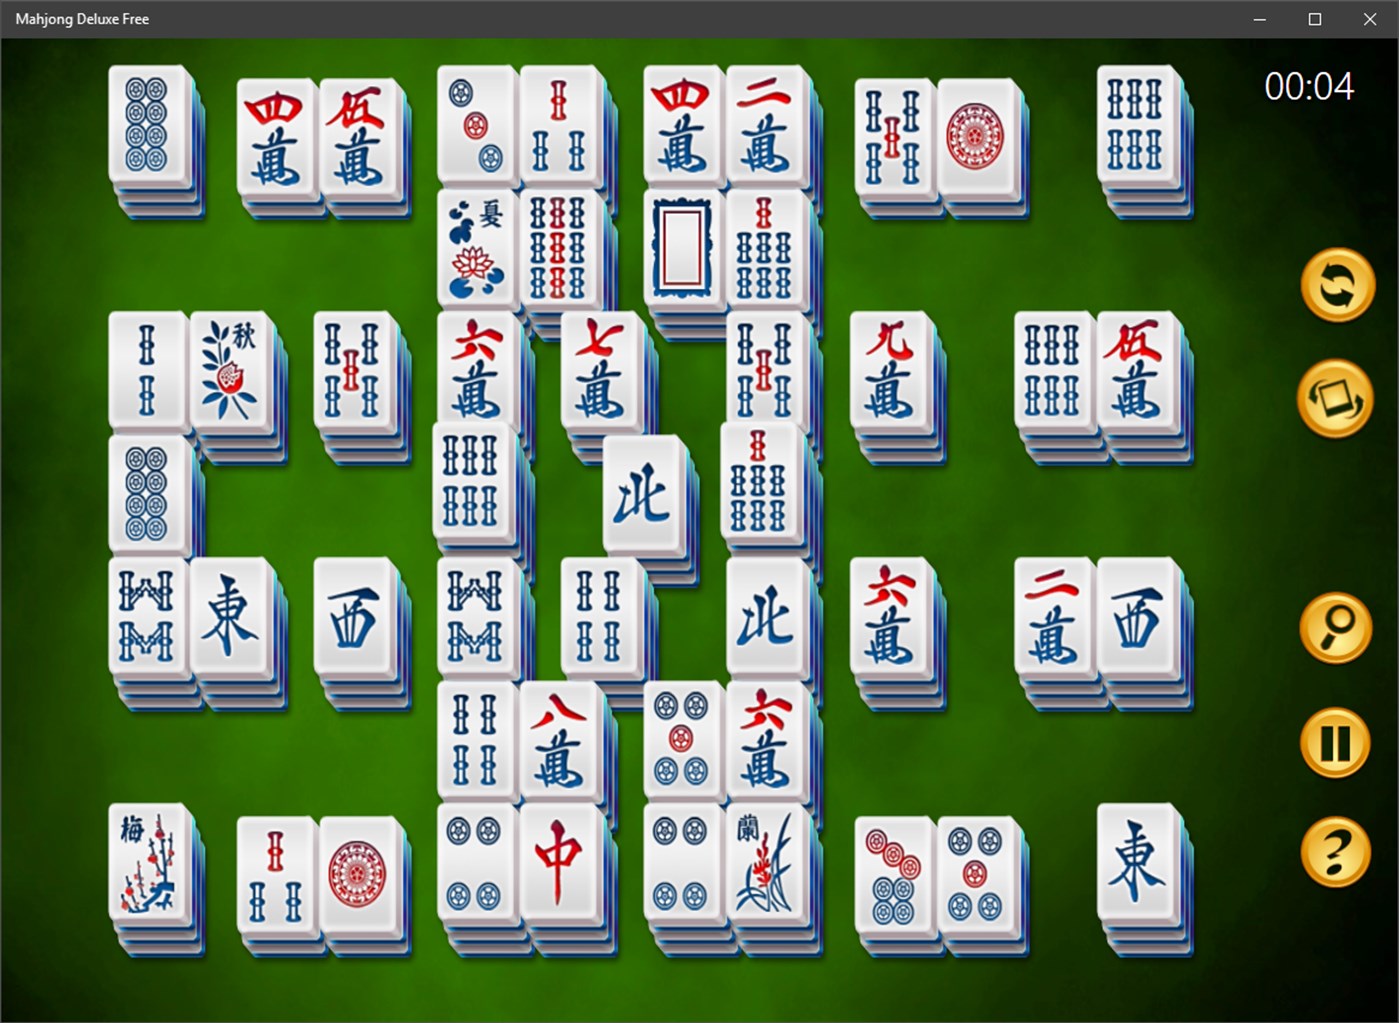 how do i download mahjong microsoft on my phone